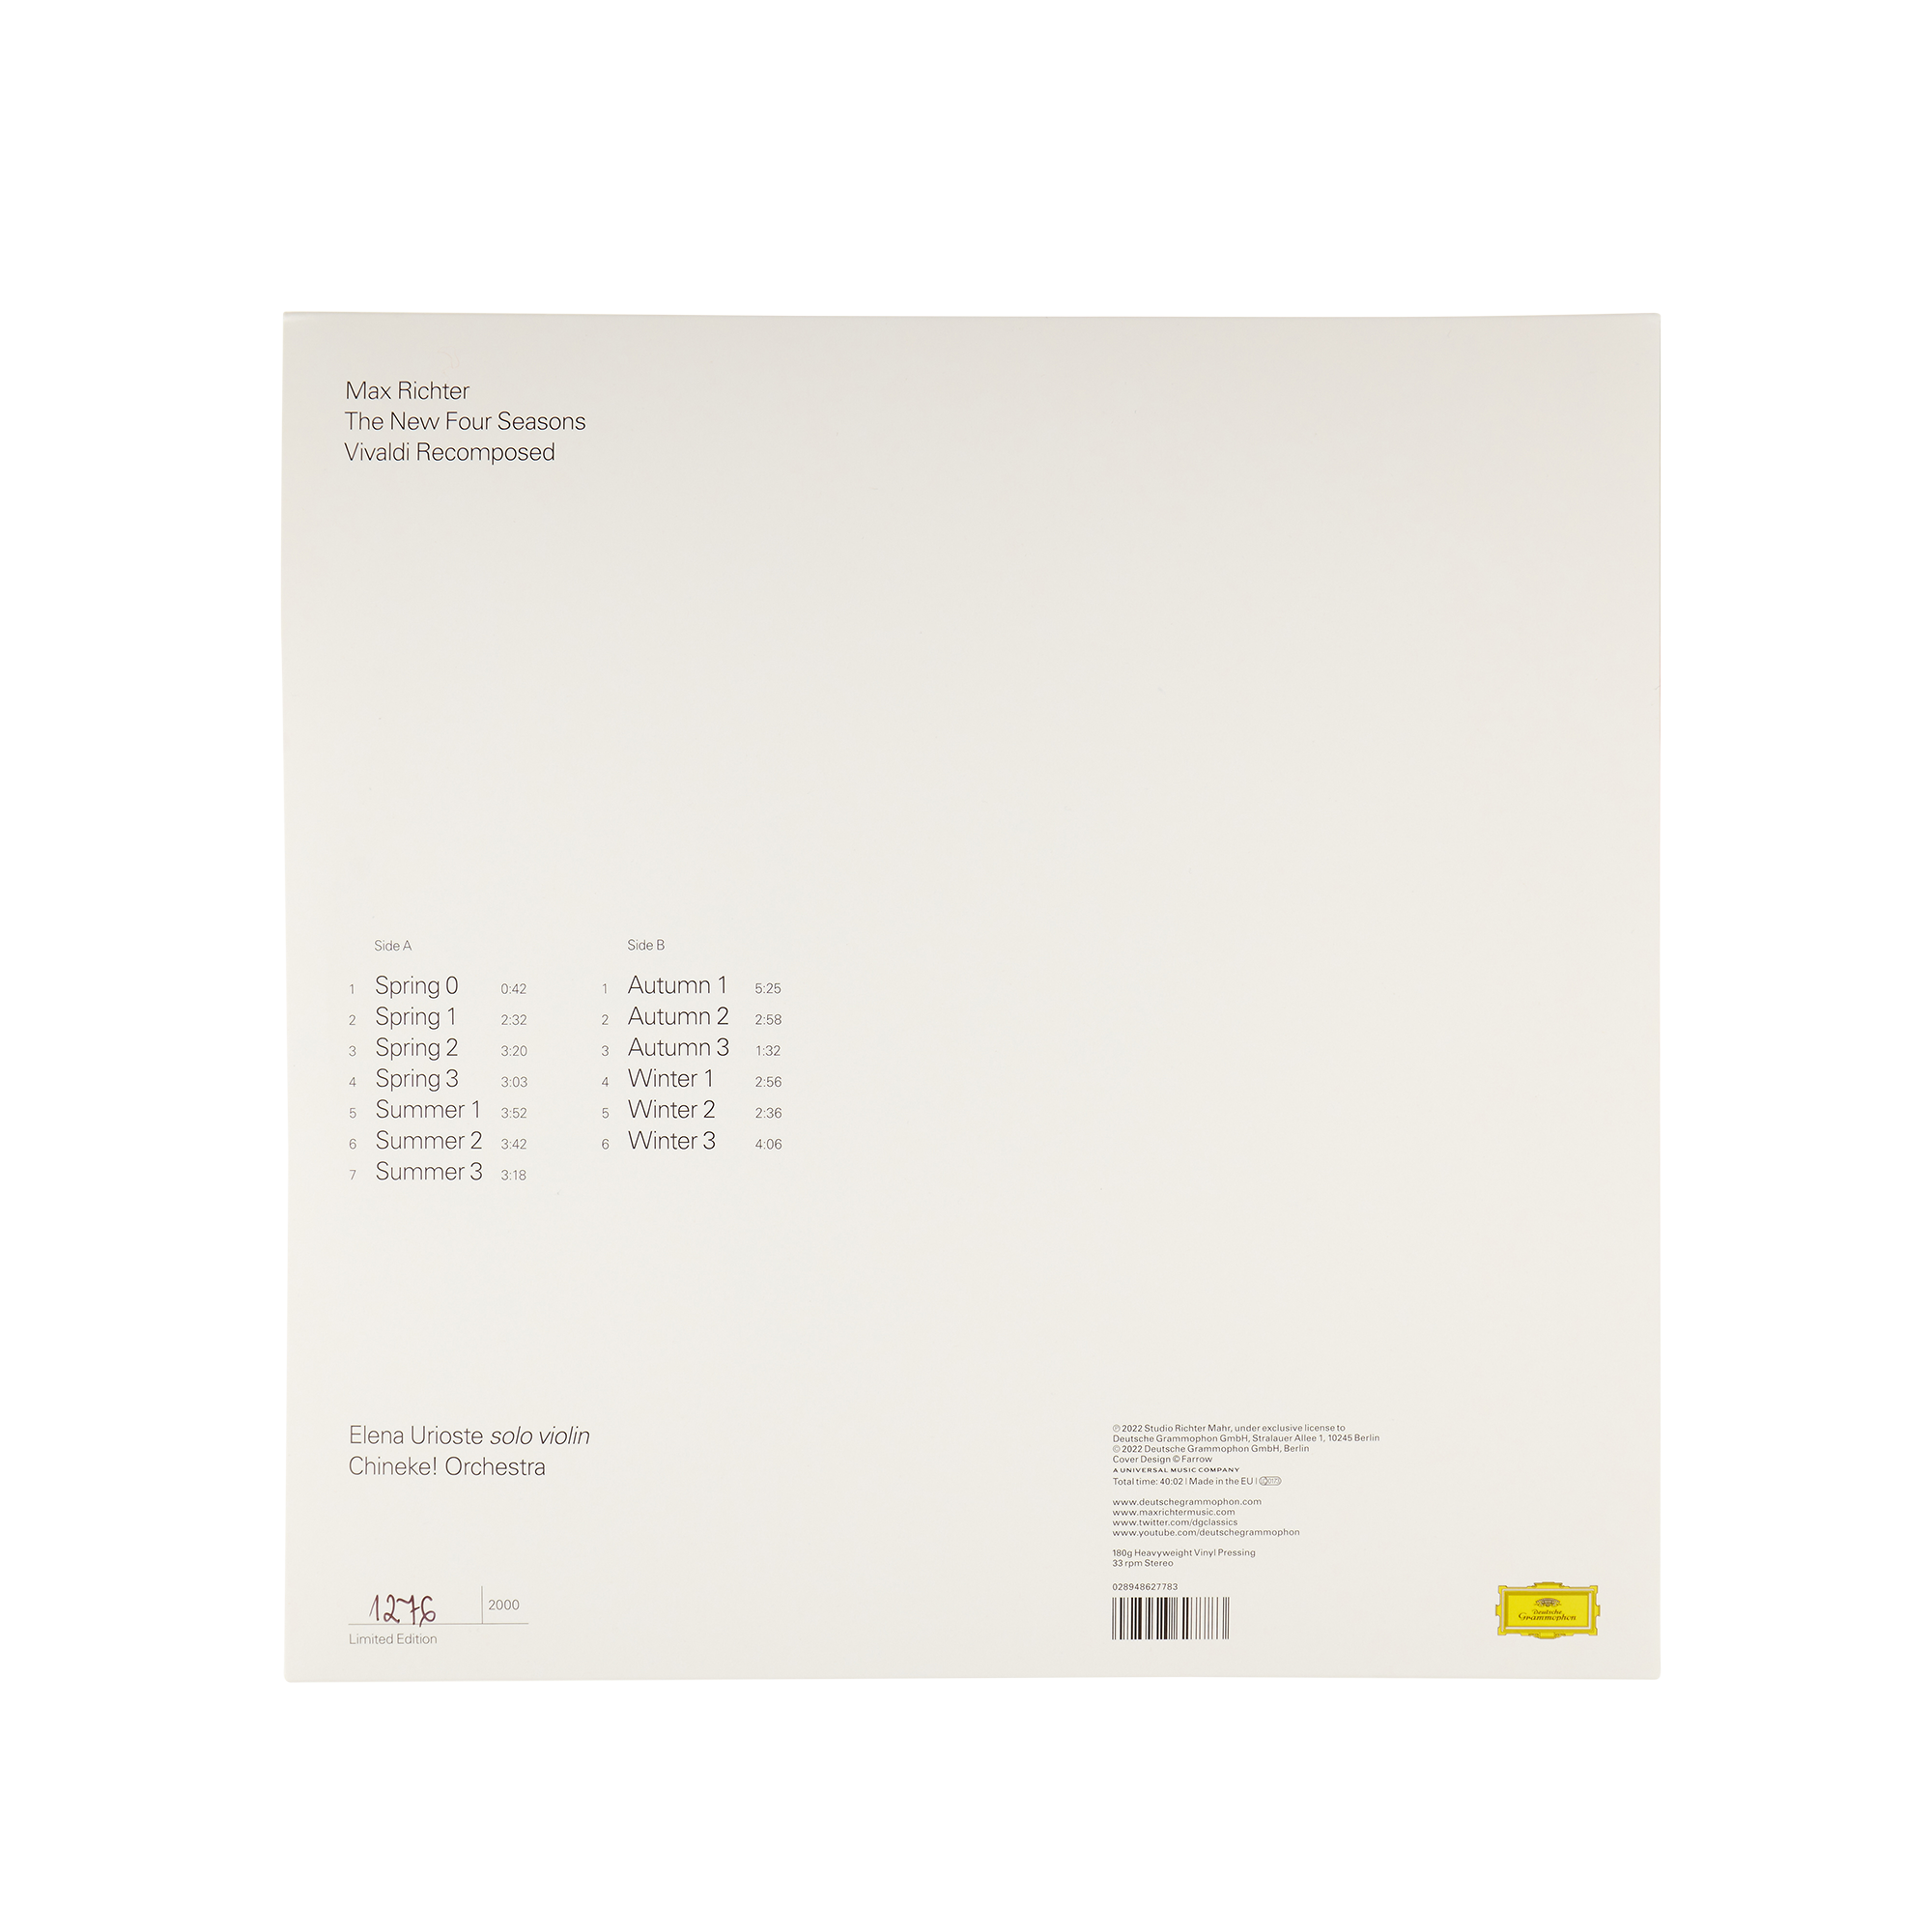 Max Richter - The New Four Seasons - Vivaldi Recomposed: Orange Marble LP